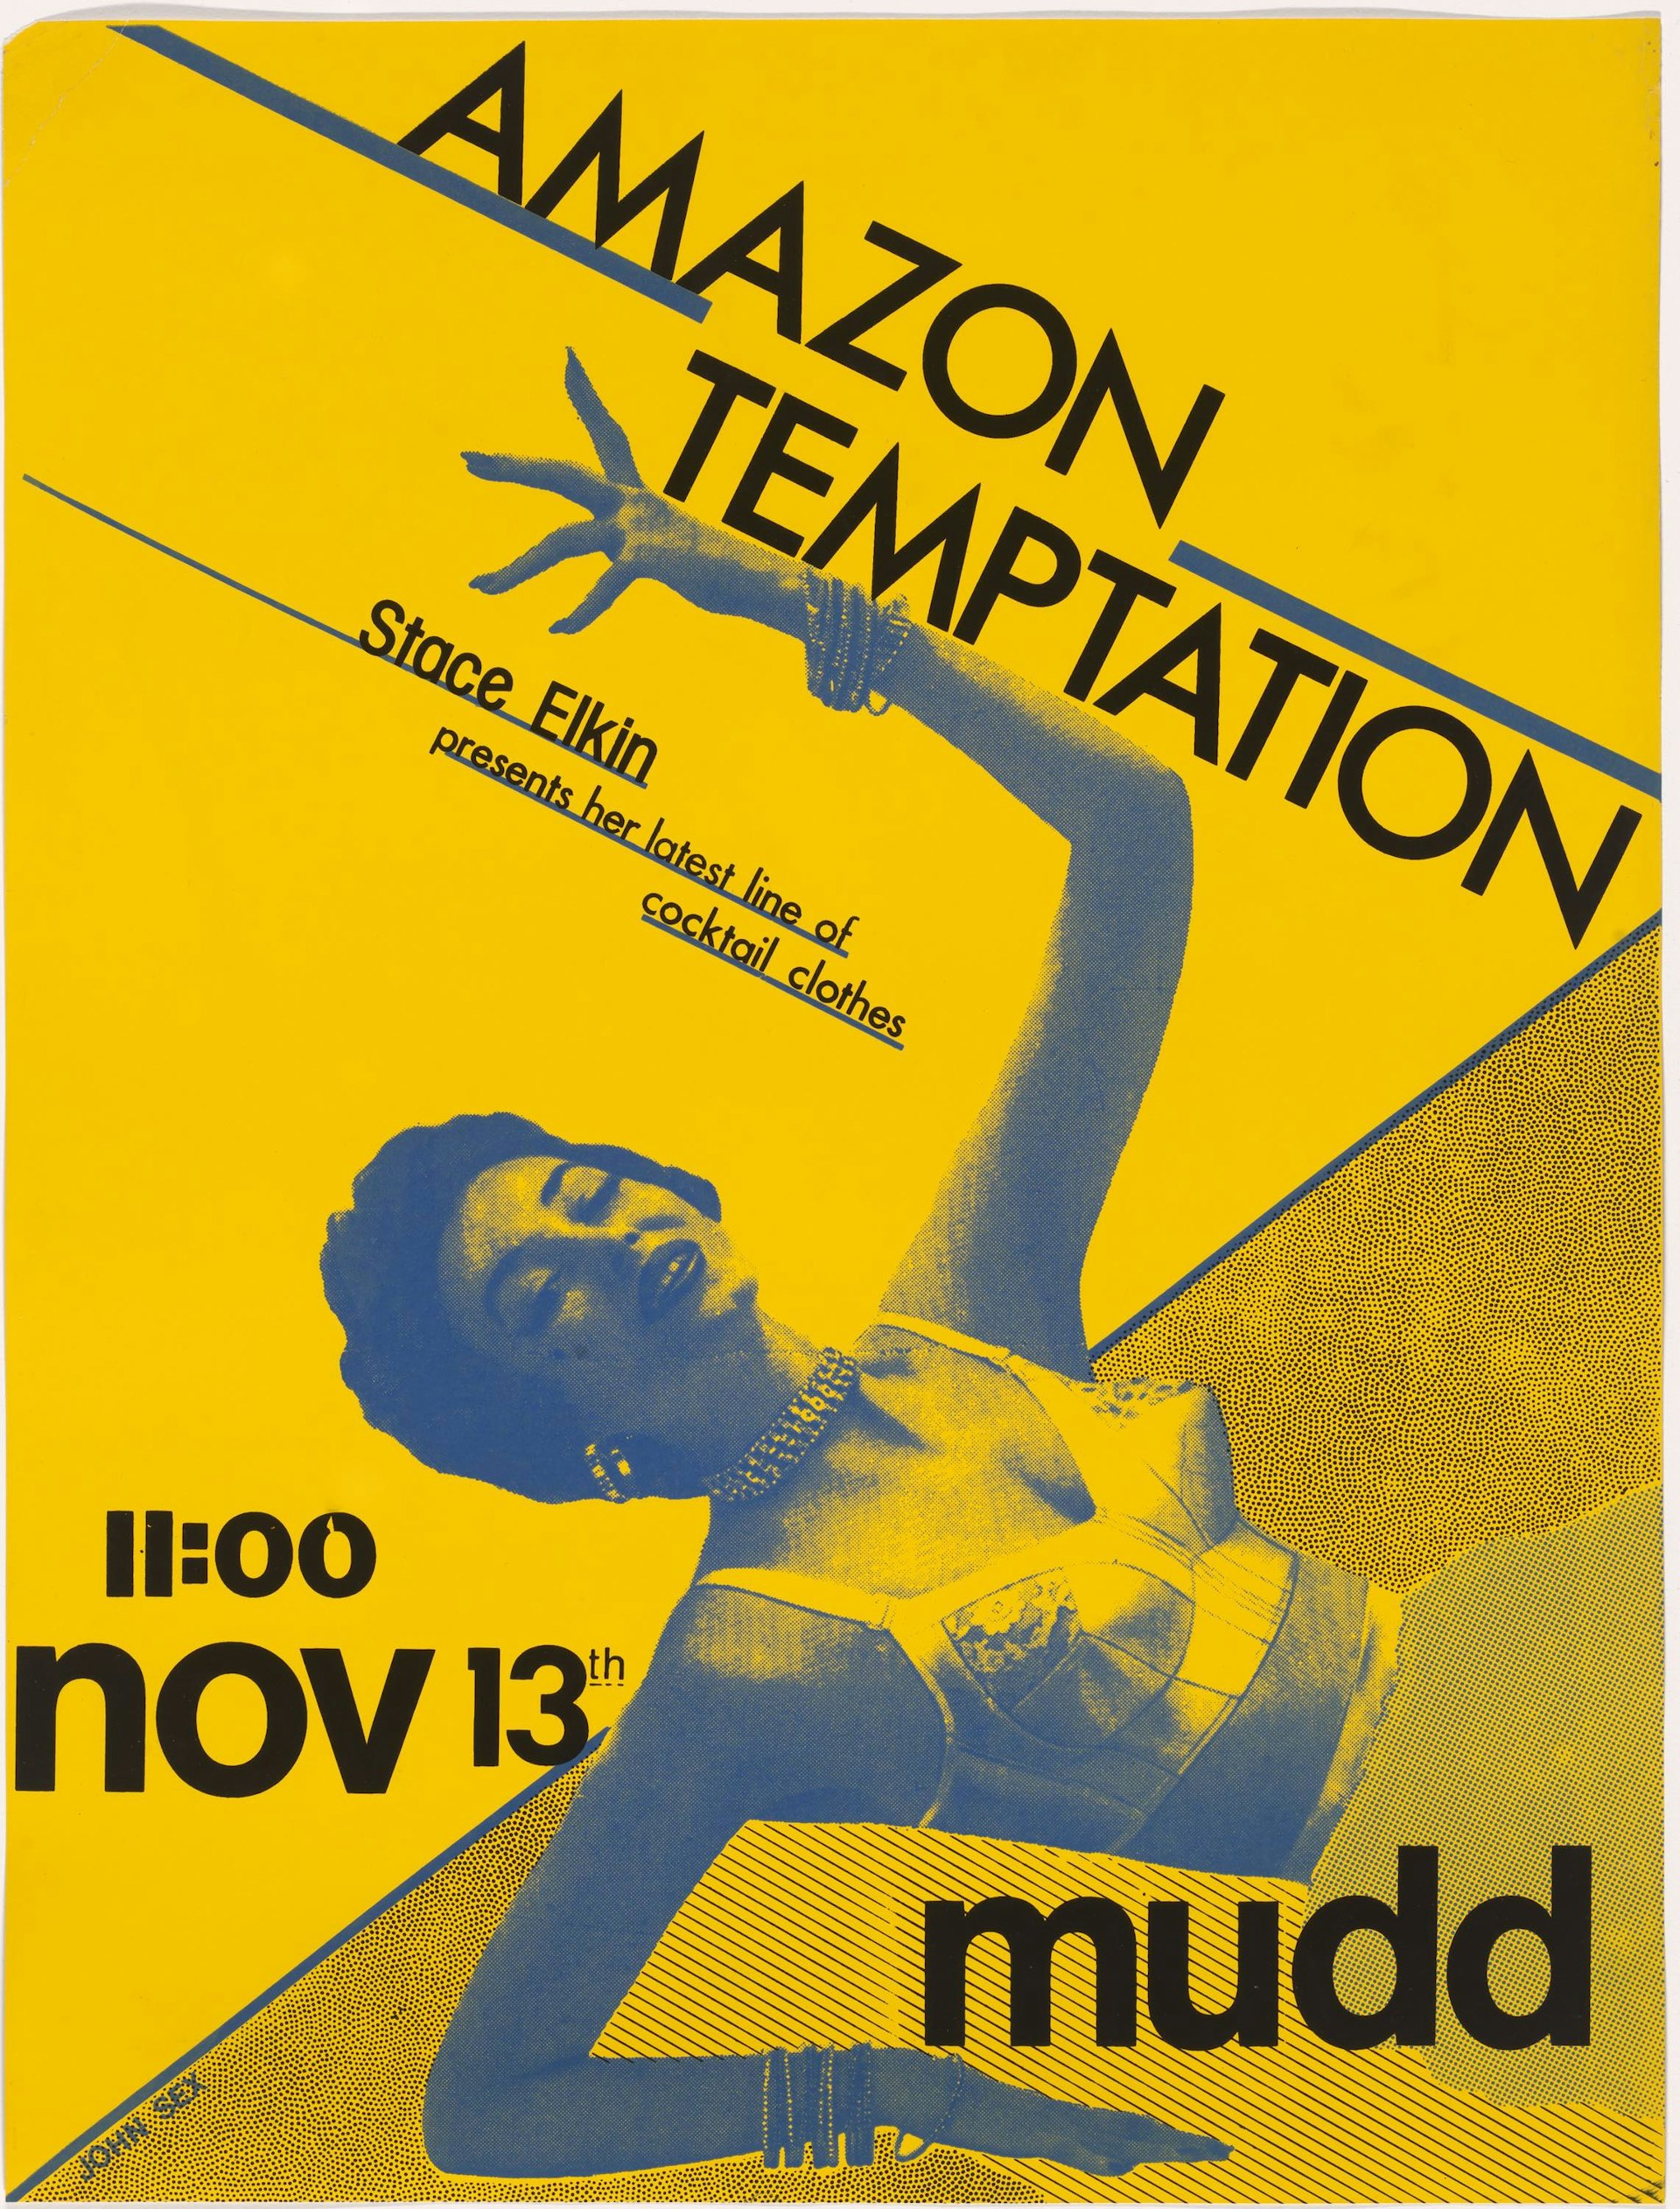 John Sex (American, 1956–1990). Amazon Temptation, 1980. Silkscreen. The Museum of Modern Art, New York. Department of Film Special Collections